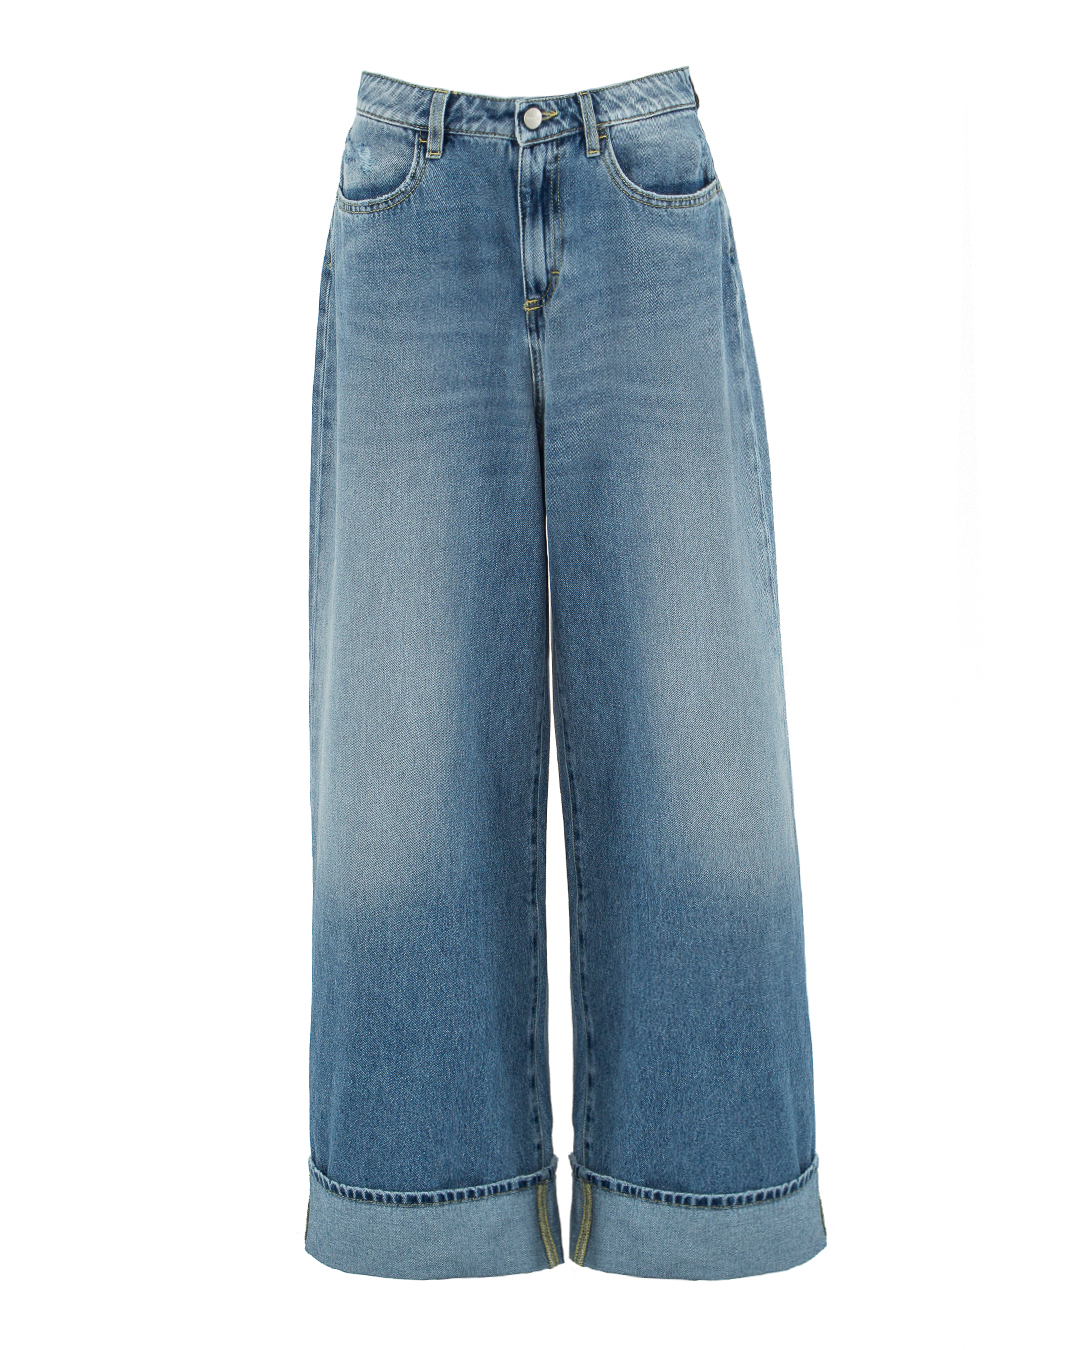 джинсы ICON DENIM NICOLEID704 синий 25, размер 25 - фото 1